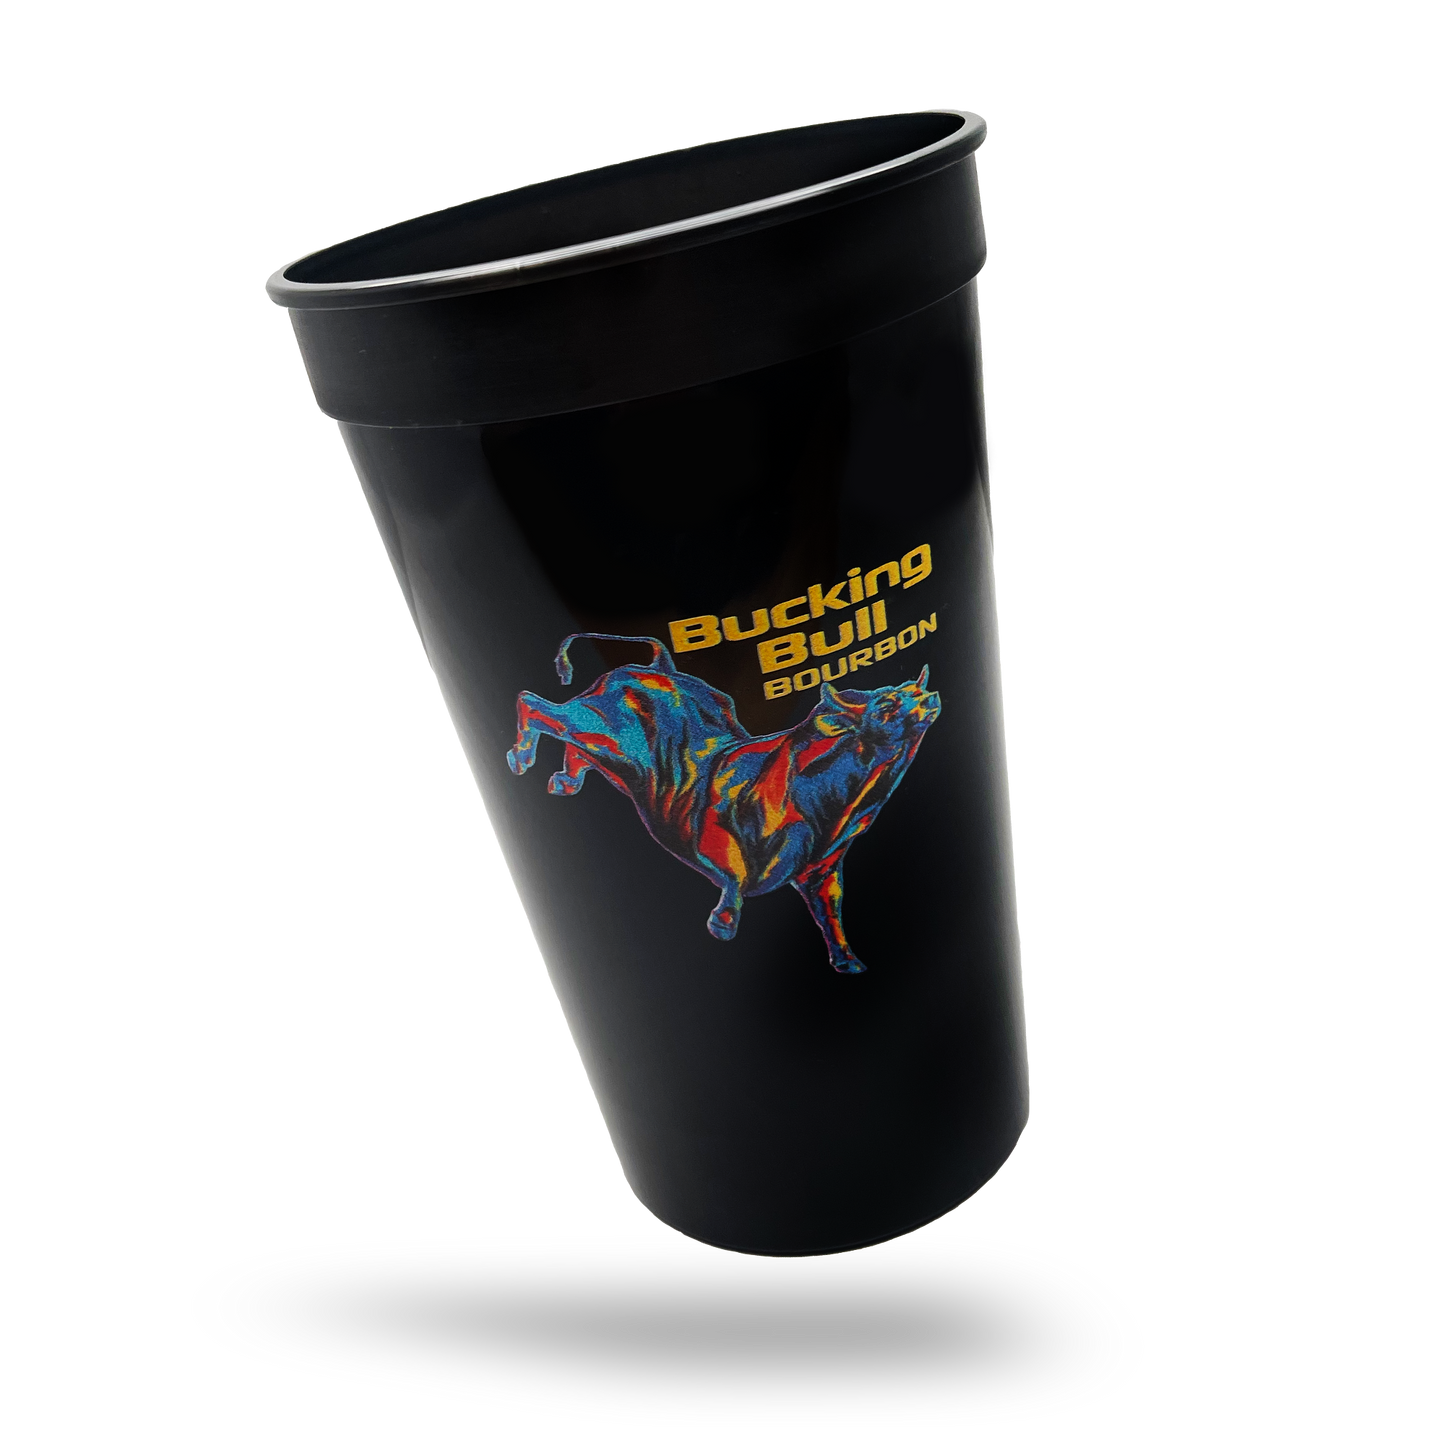 Bucking Bull Stadium Cup (22 oz.) (Black)